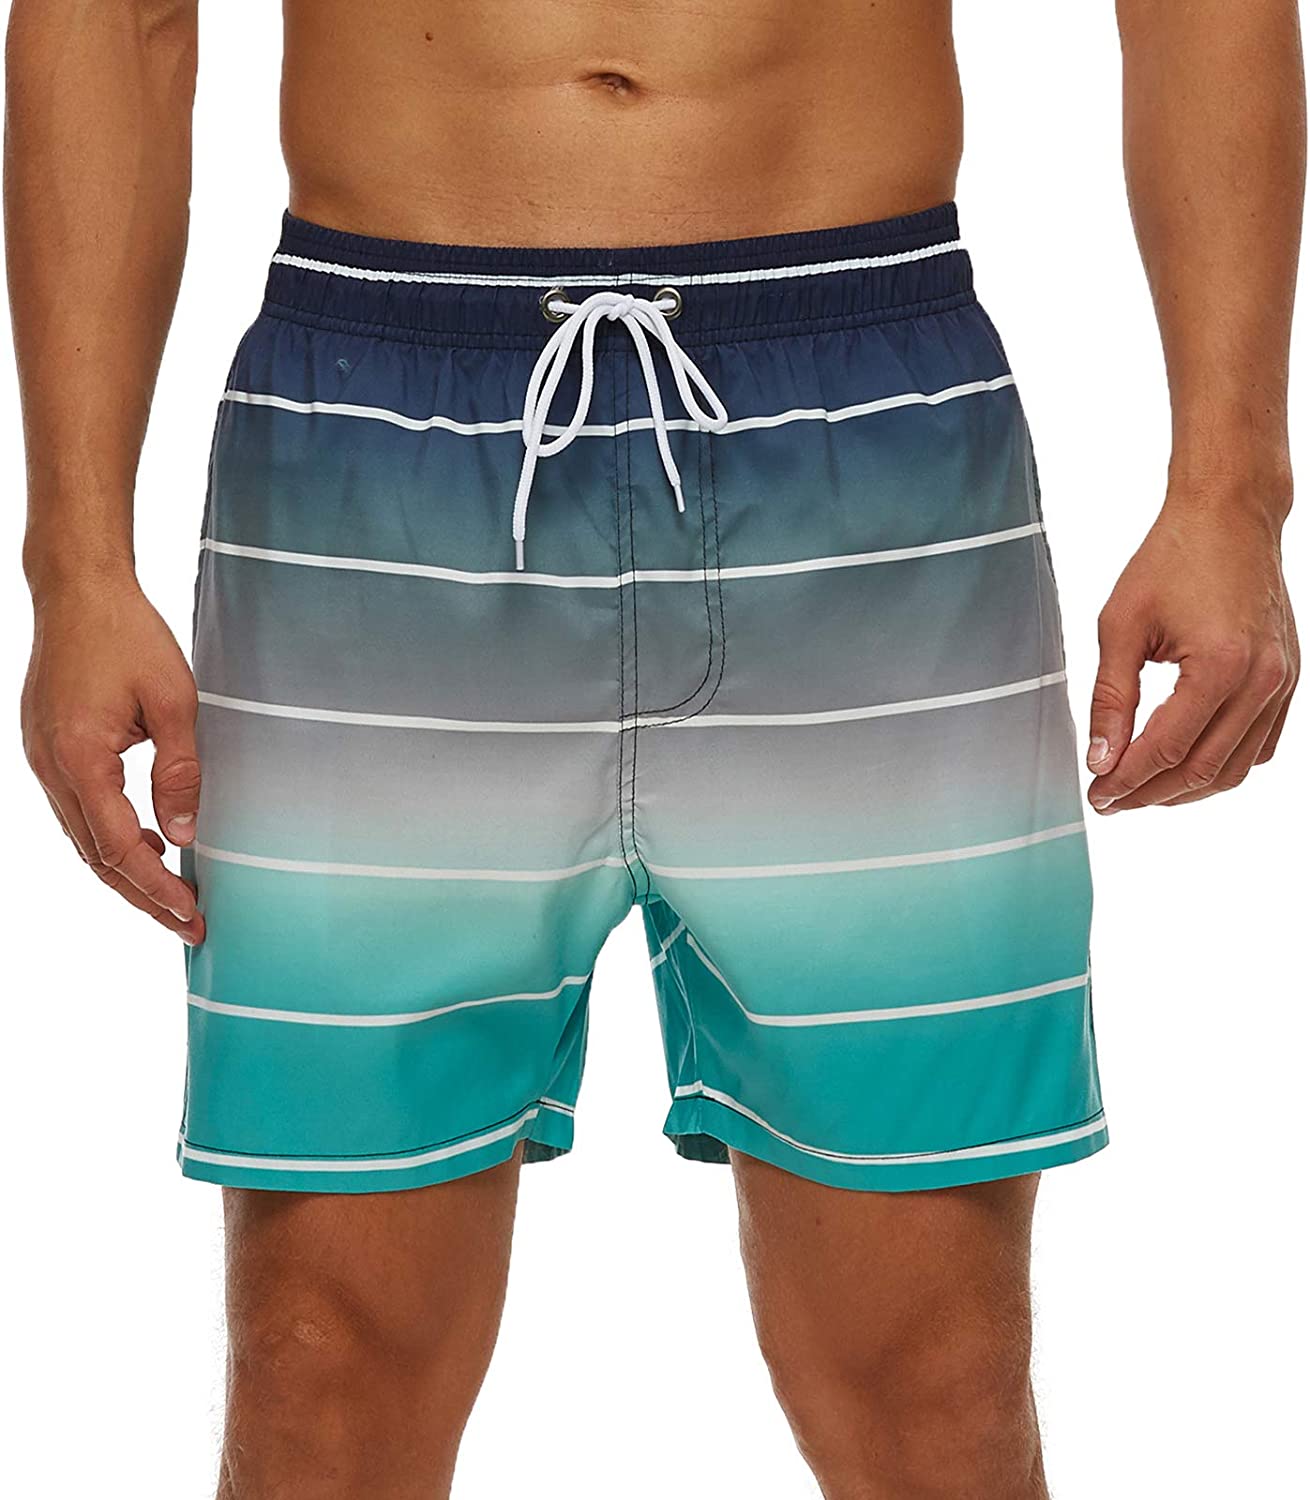 SILKWORLD Men's Swim Trunks Quick Dry Shorts with Pockets 